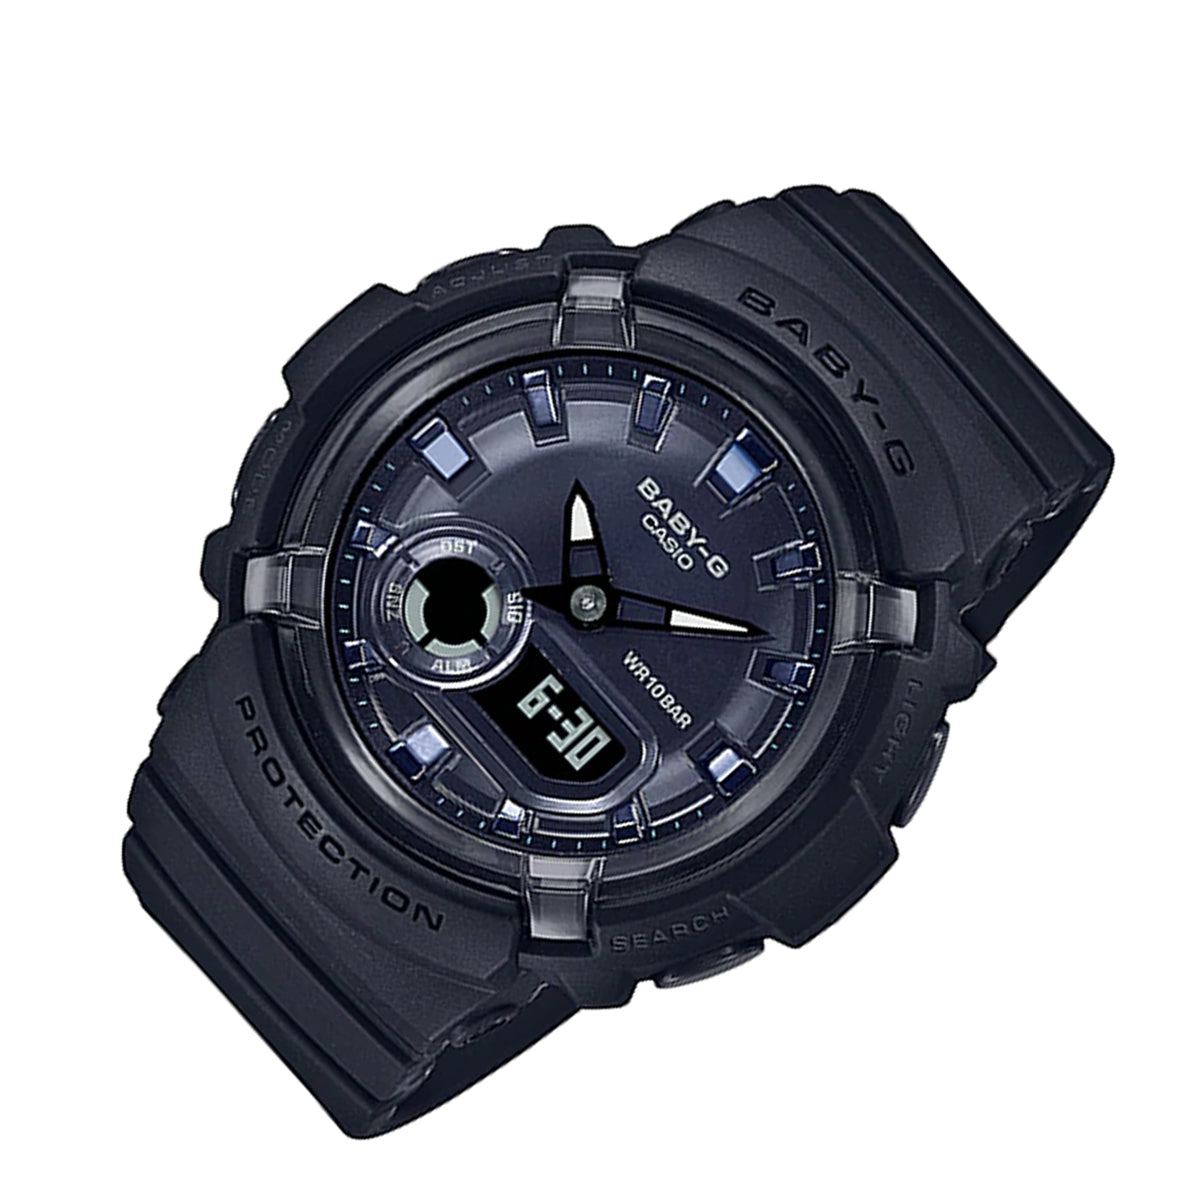 Casio Baby-G Standard Anadigi All Black Stealth Series Watch BGA-280-1ADR